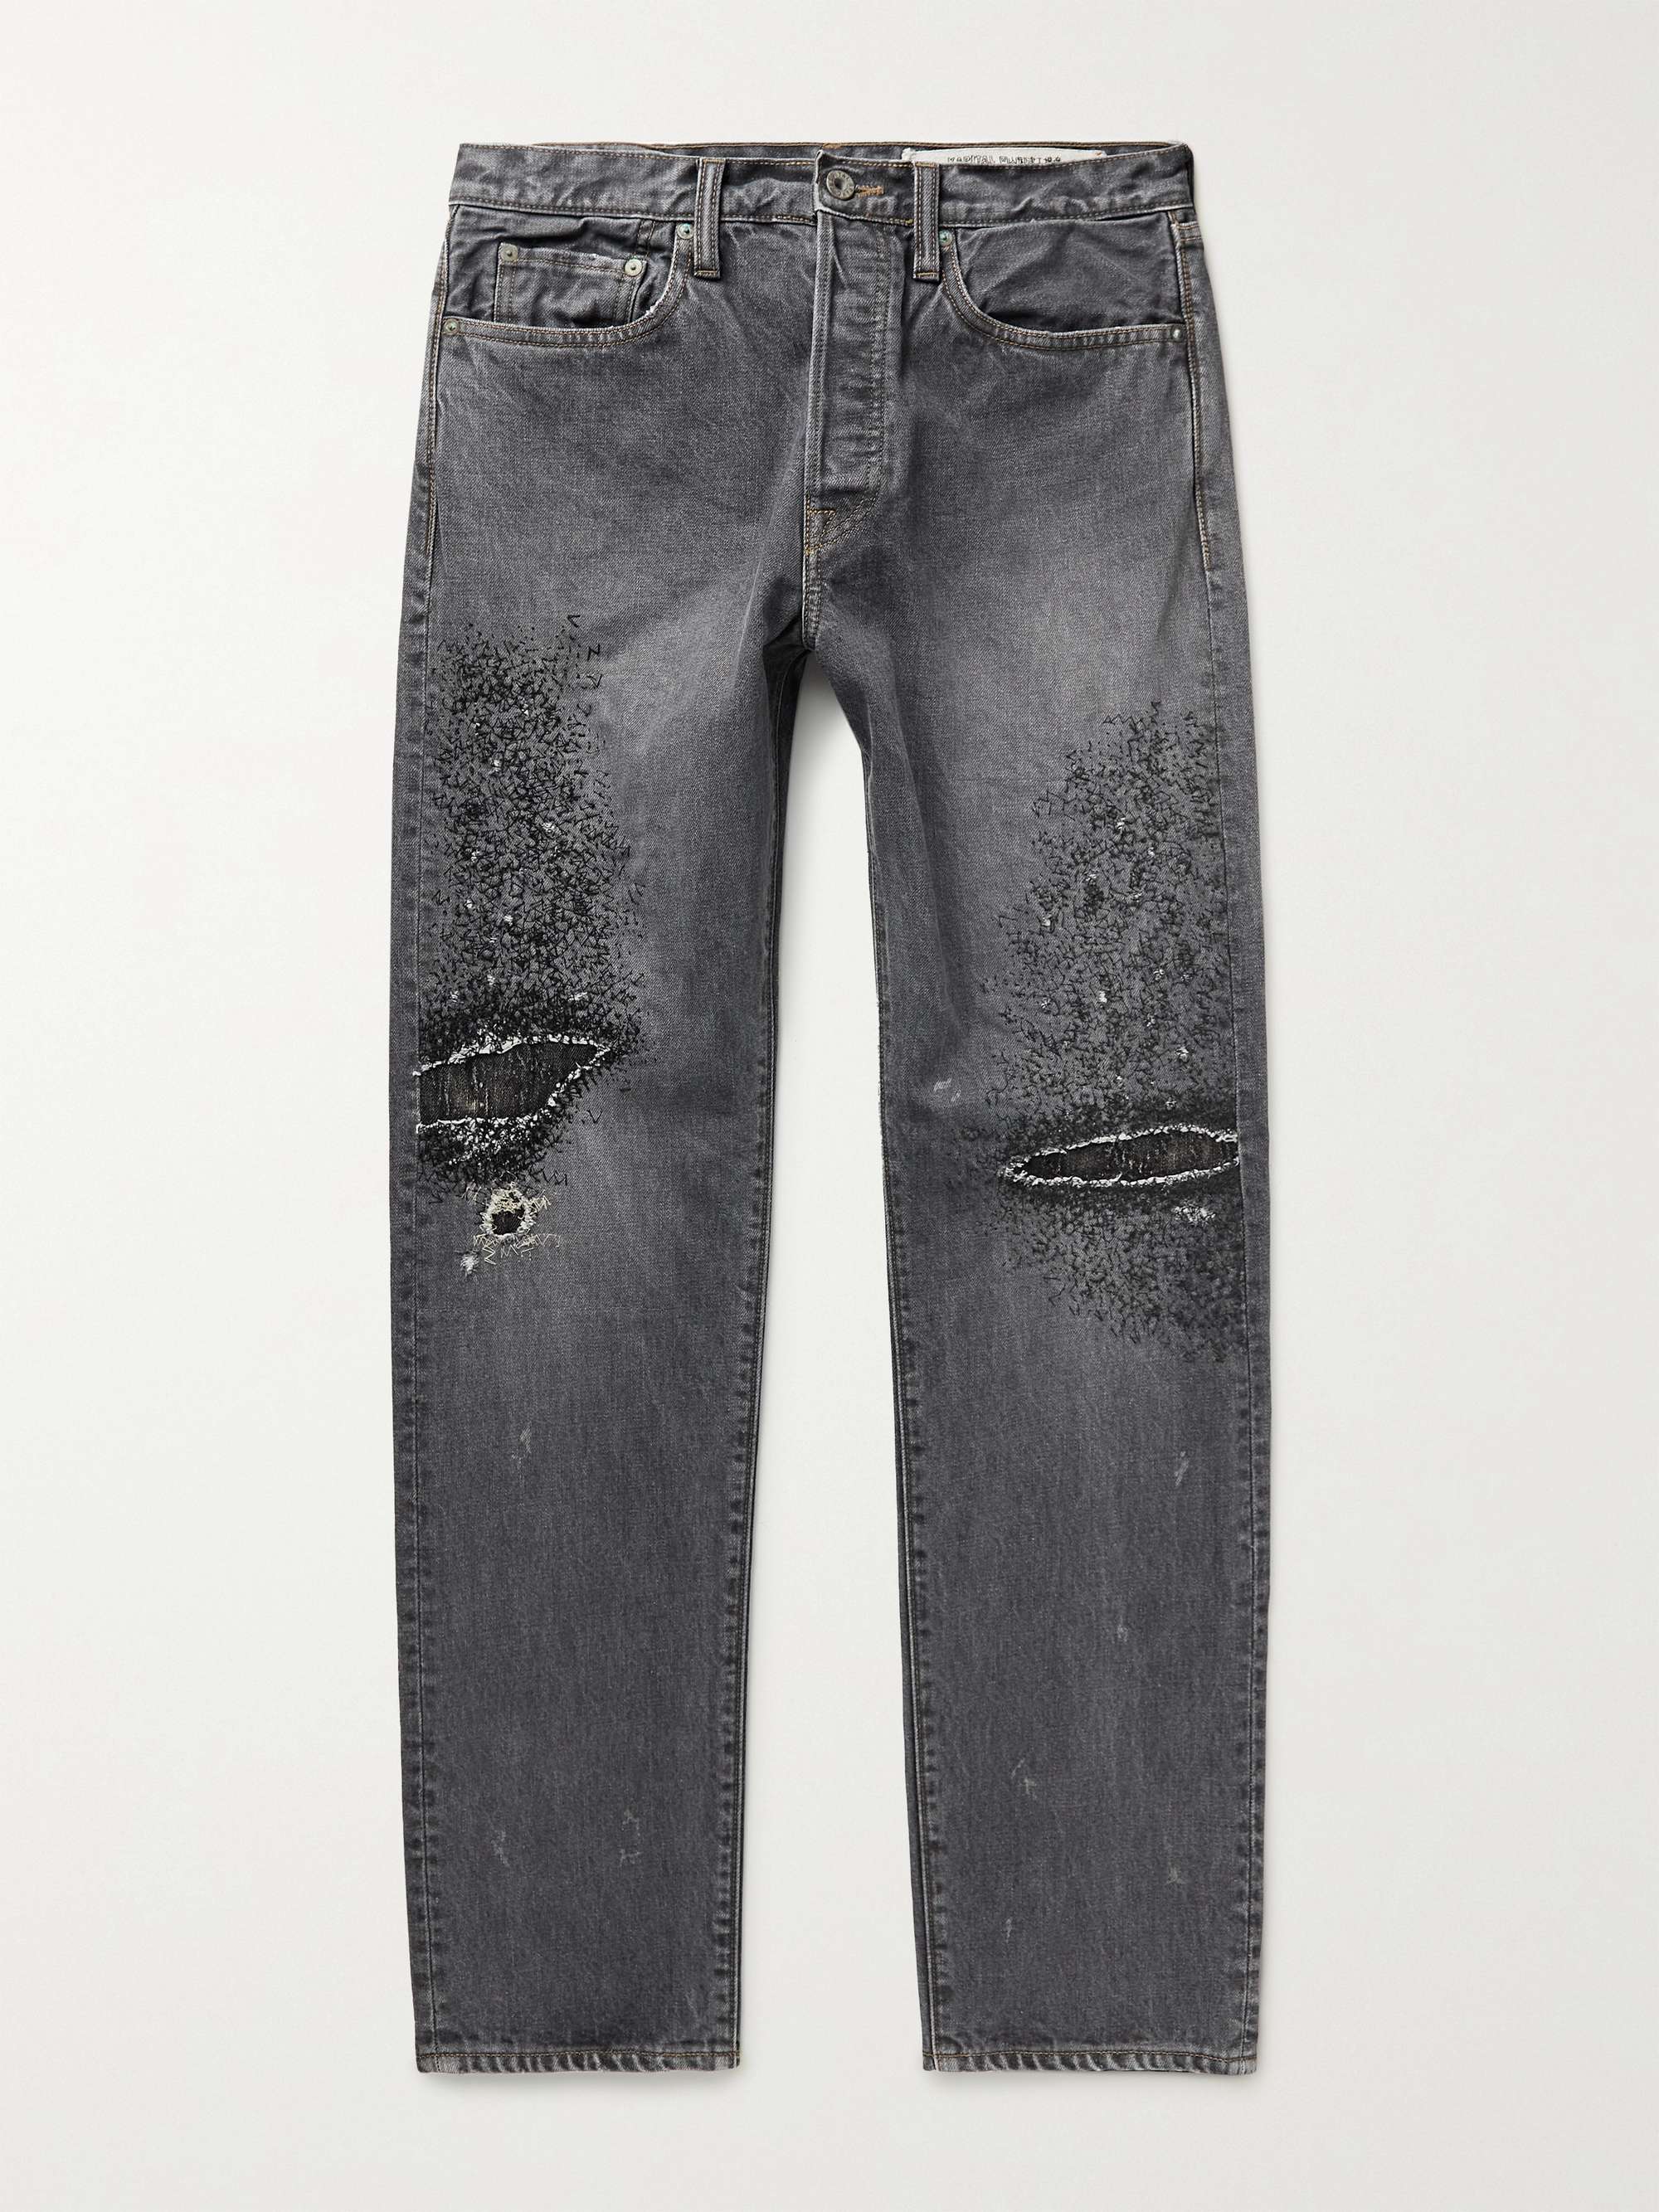 Monkey CISCO Distressed Denim Jeans | MR PORTER